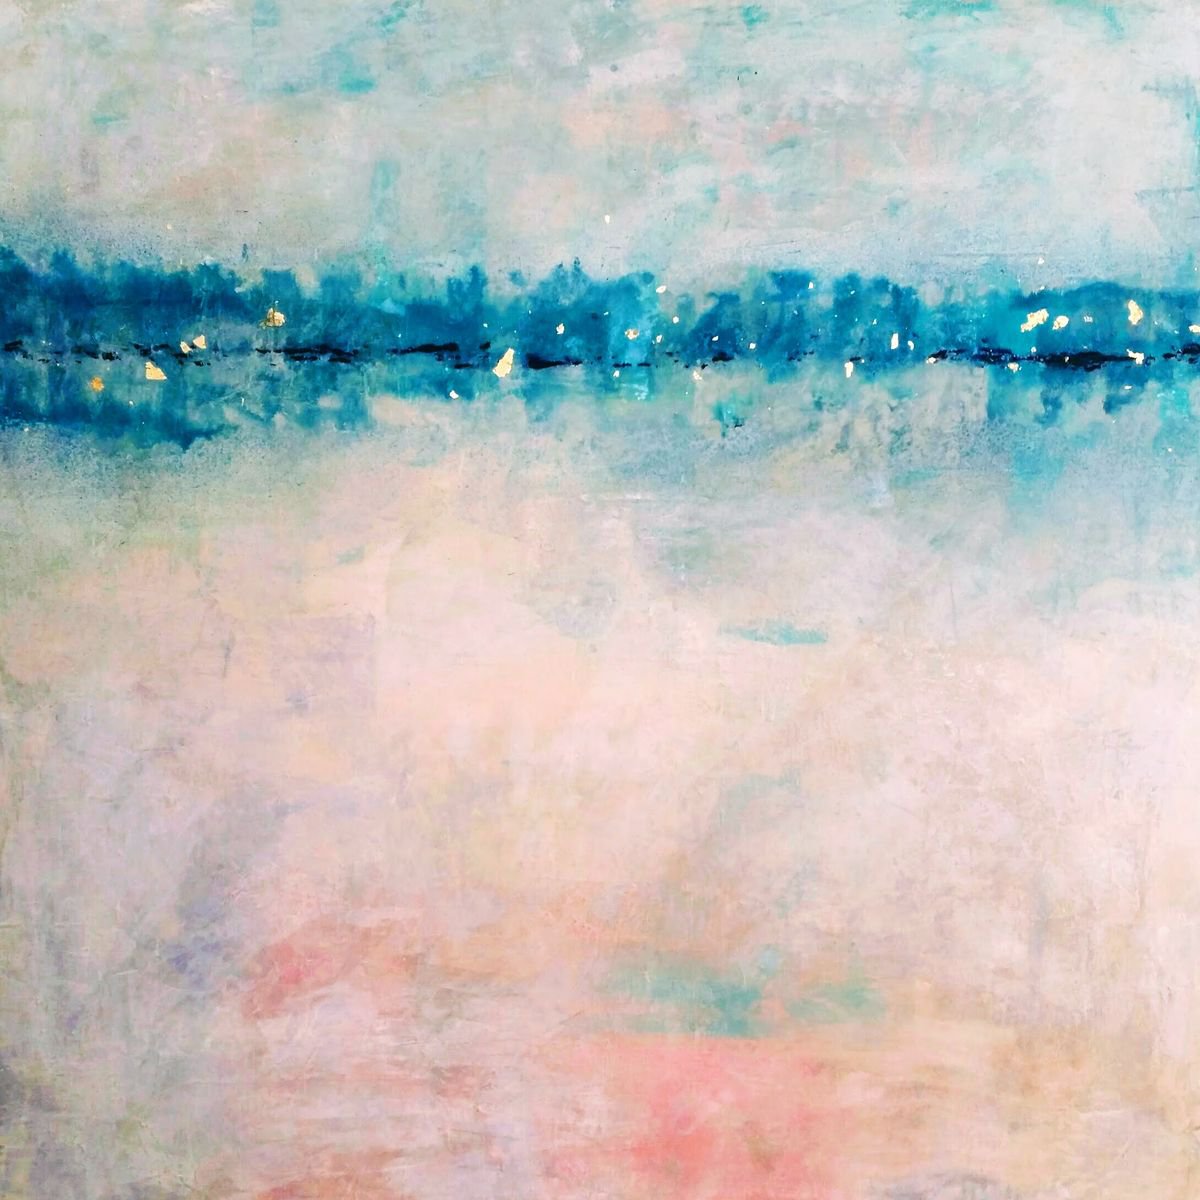 Untitled (Seascape) by Jane Efroni